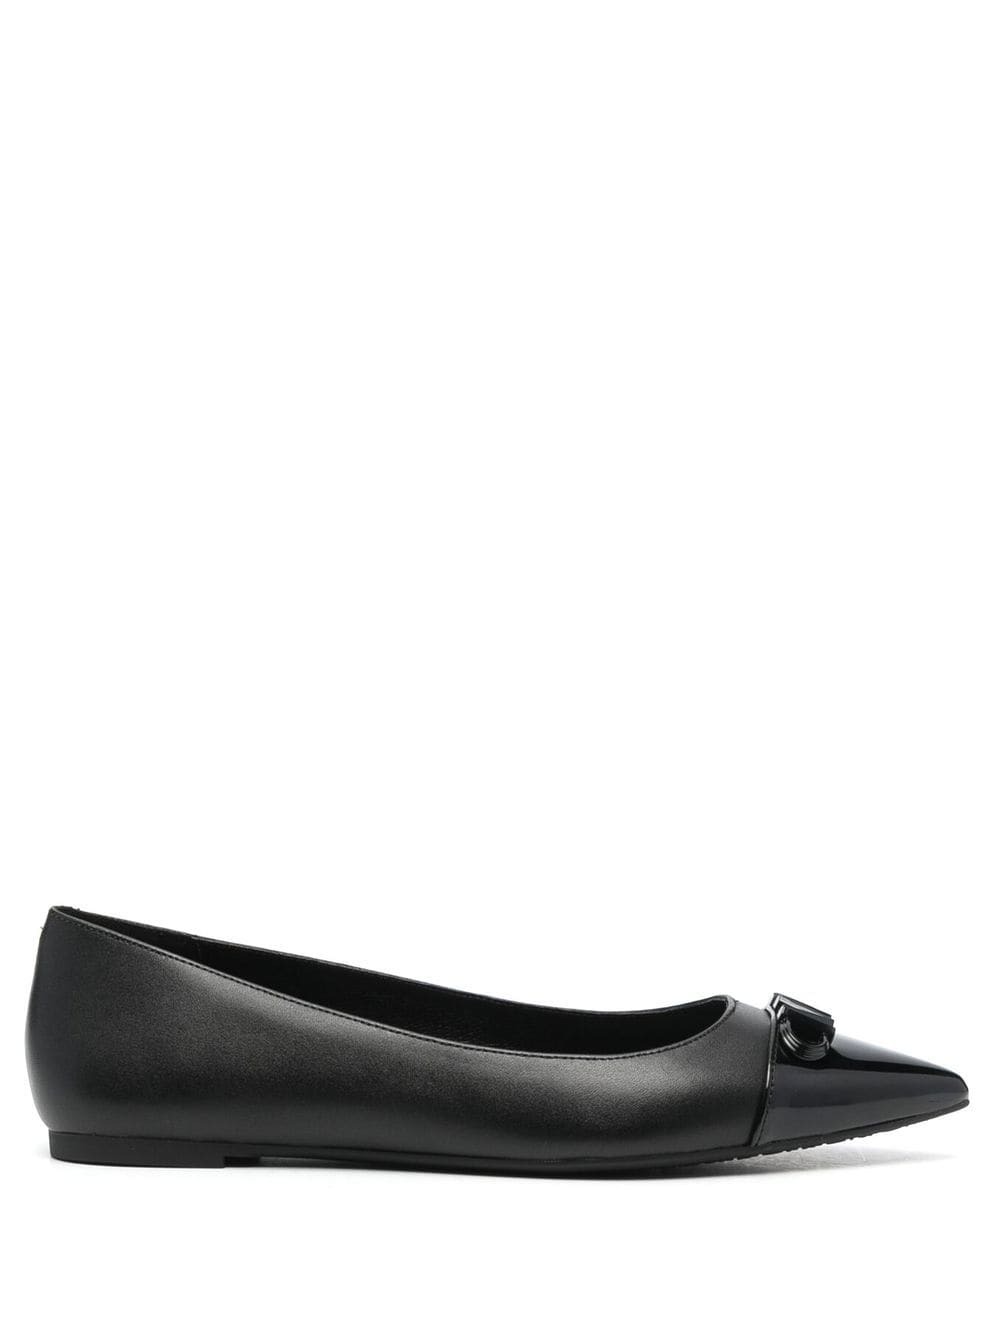 Michael Kors Collection logo leather ballerina shoes - Black